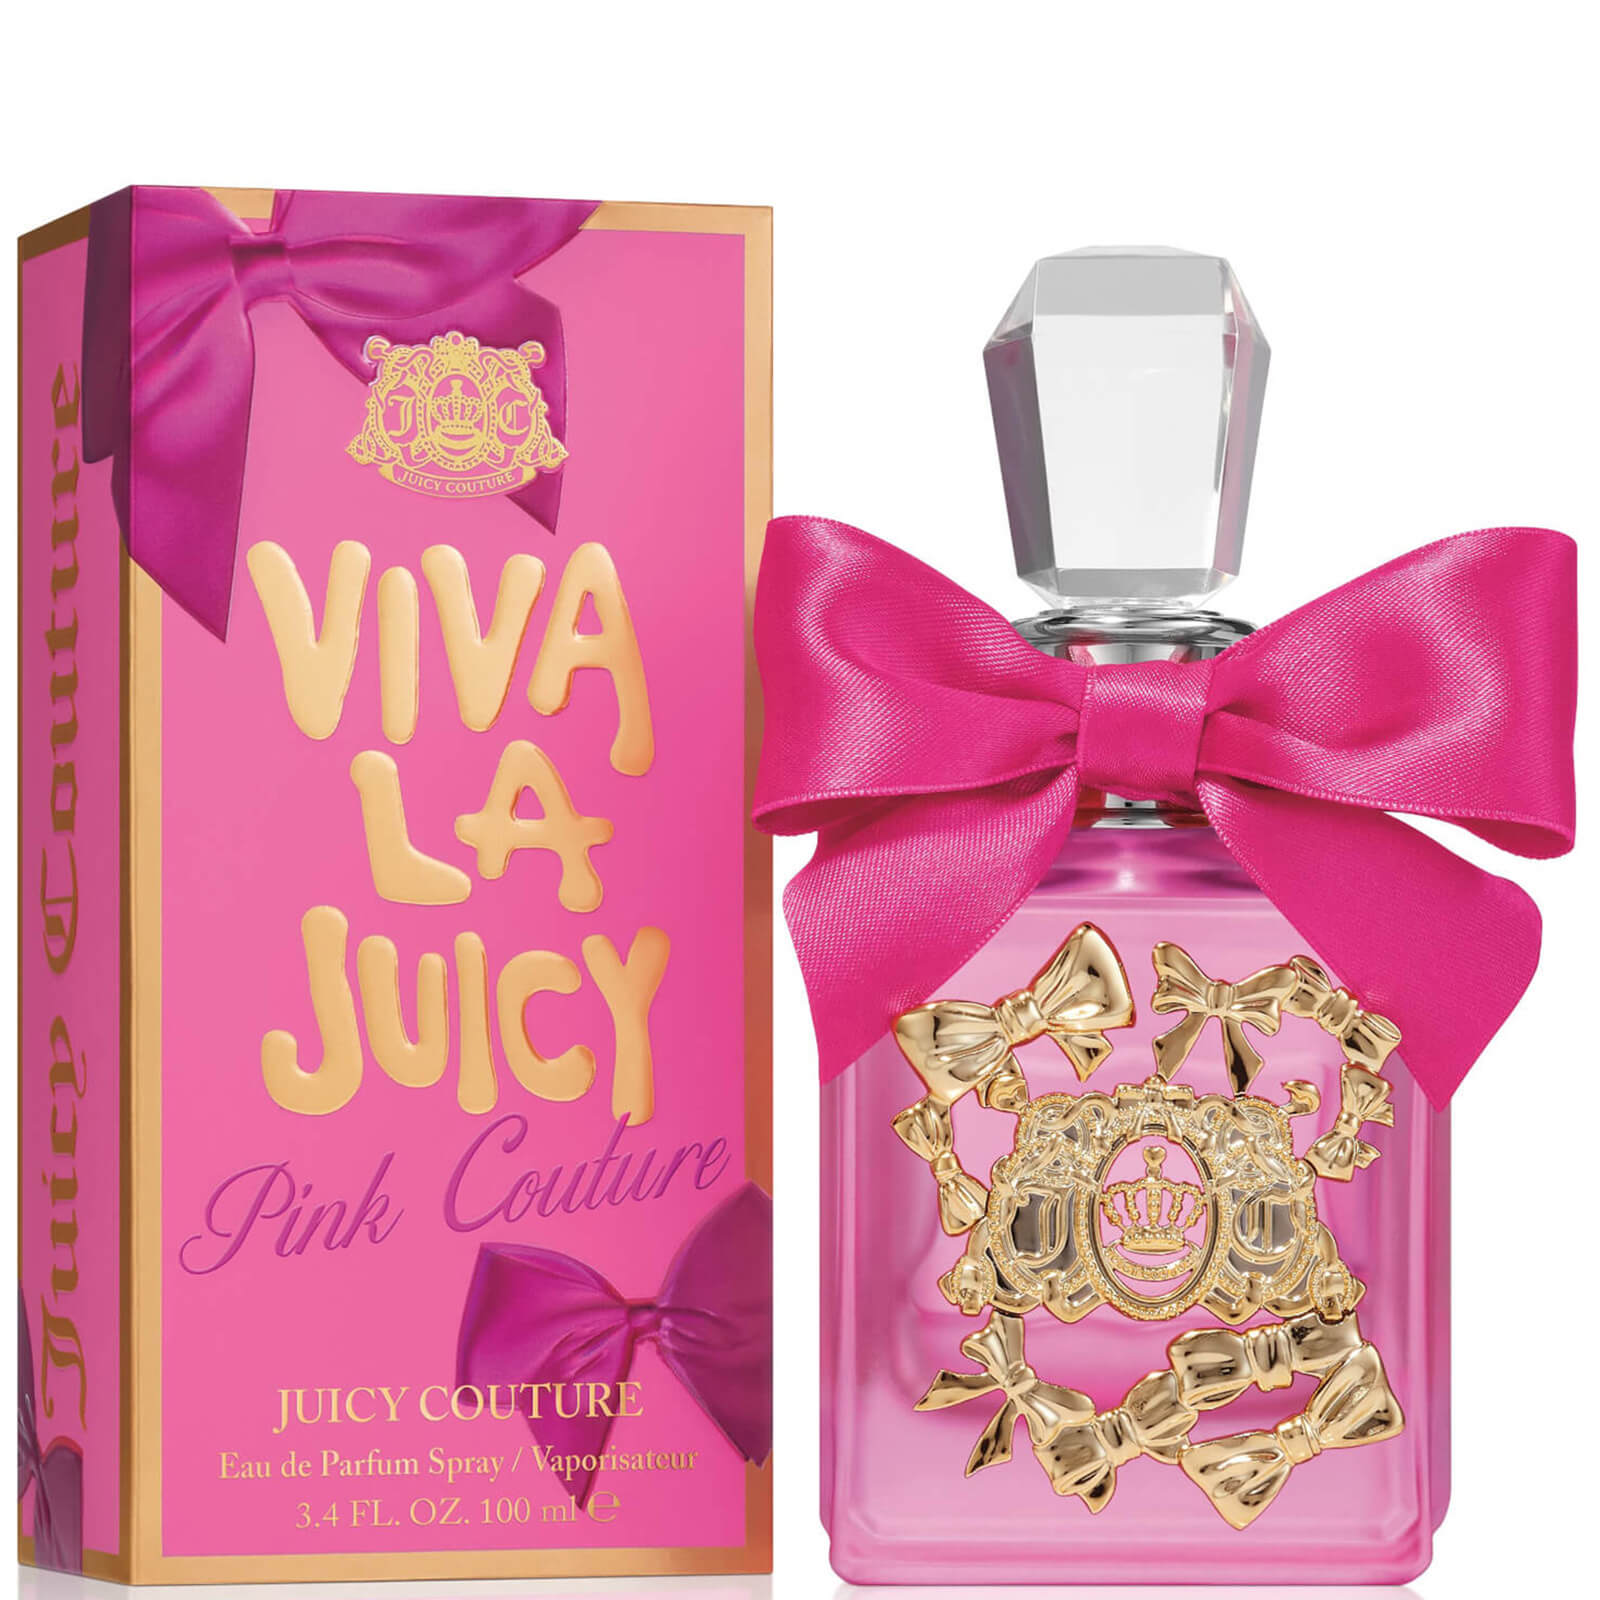 juicy-couture-viva-la-juicy-pink-couture-eau-de-parfum-spray-100ml